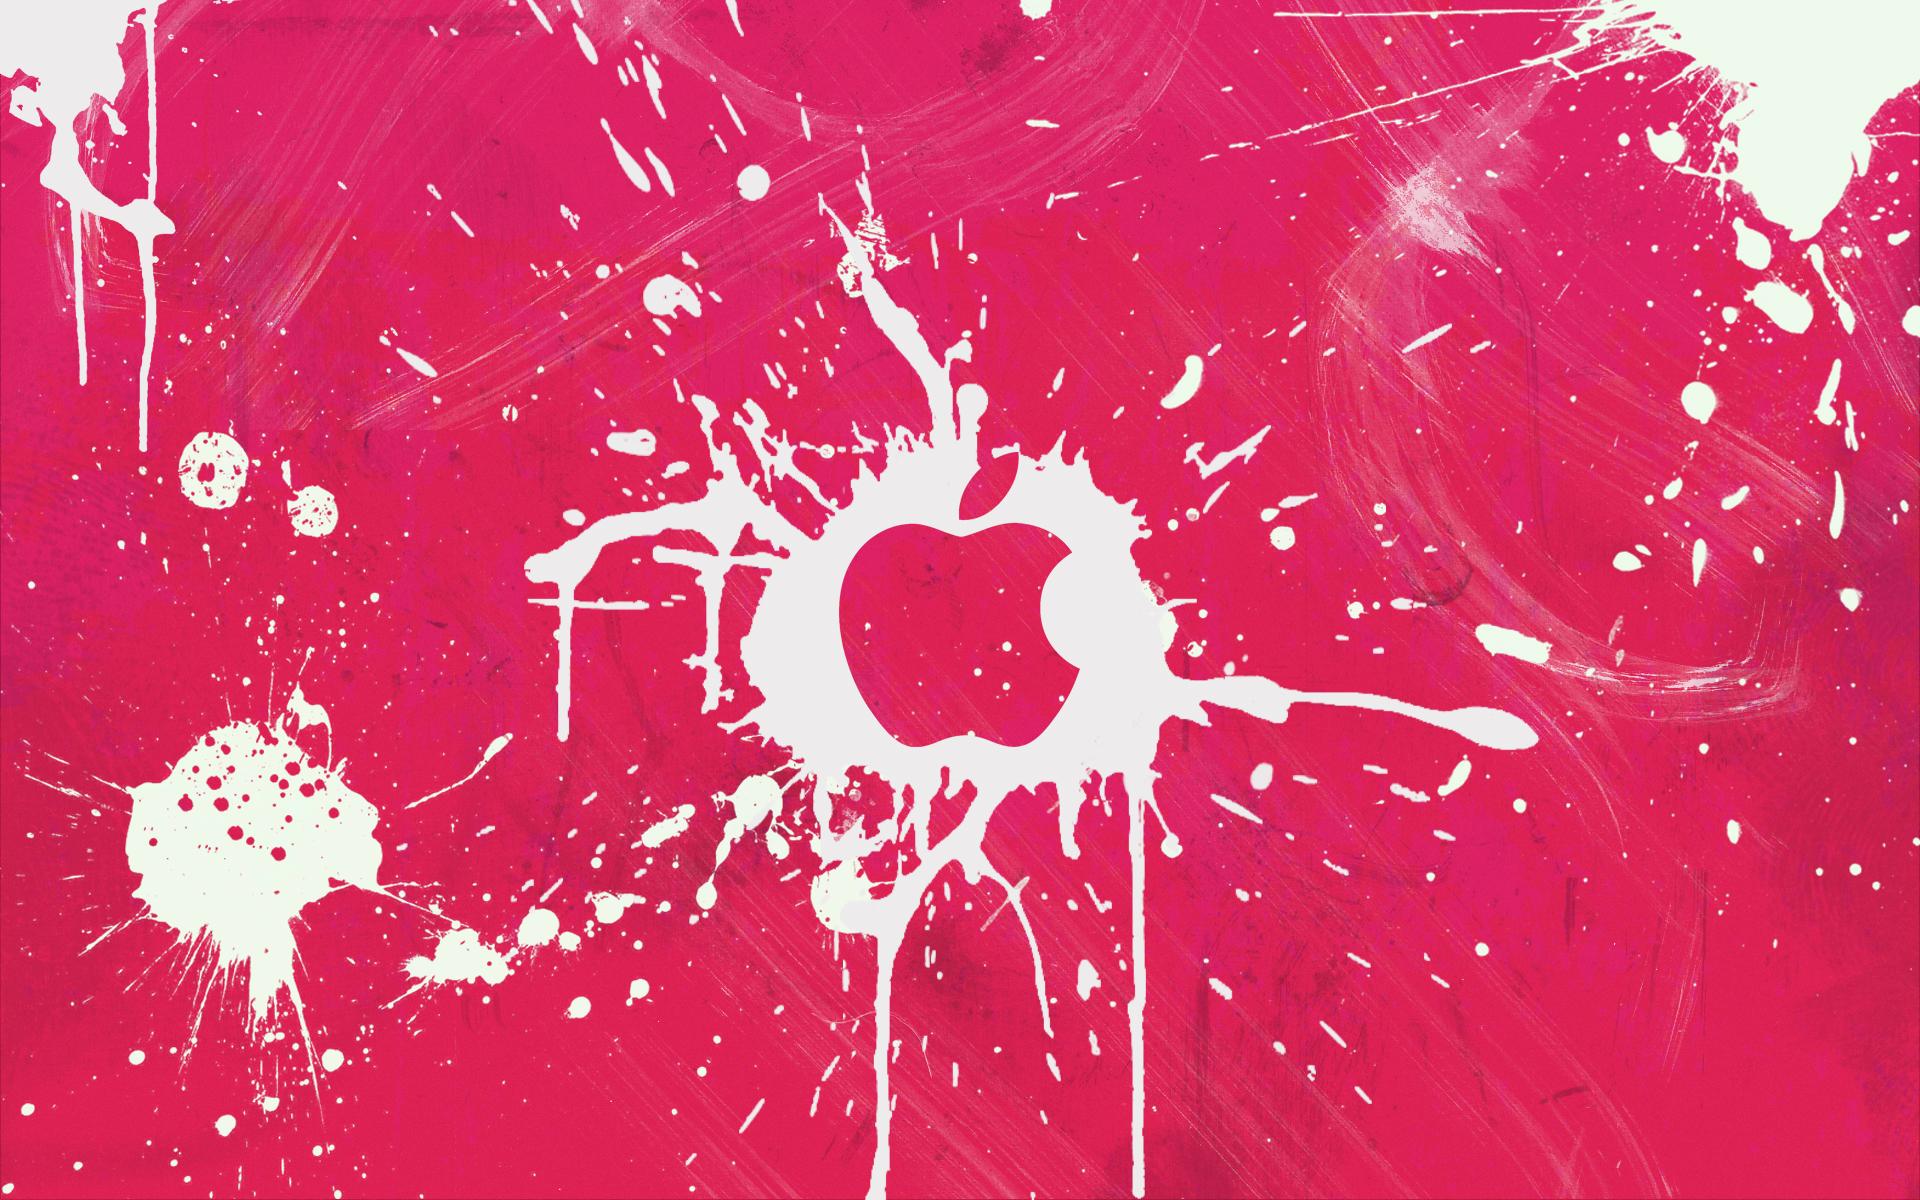 apple logo brand desktop wallpaper hd 1920x1200